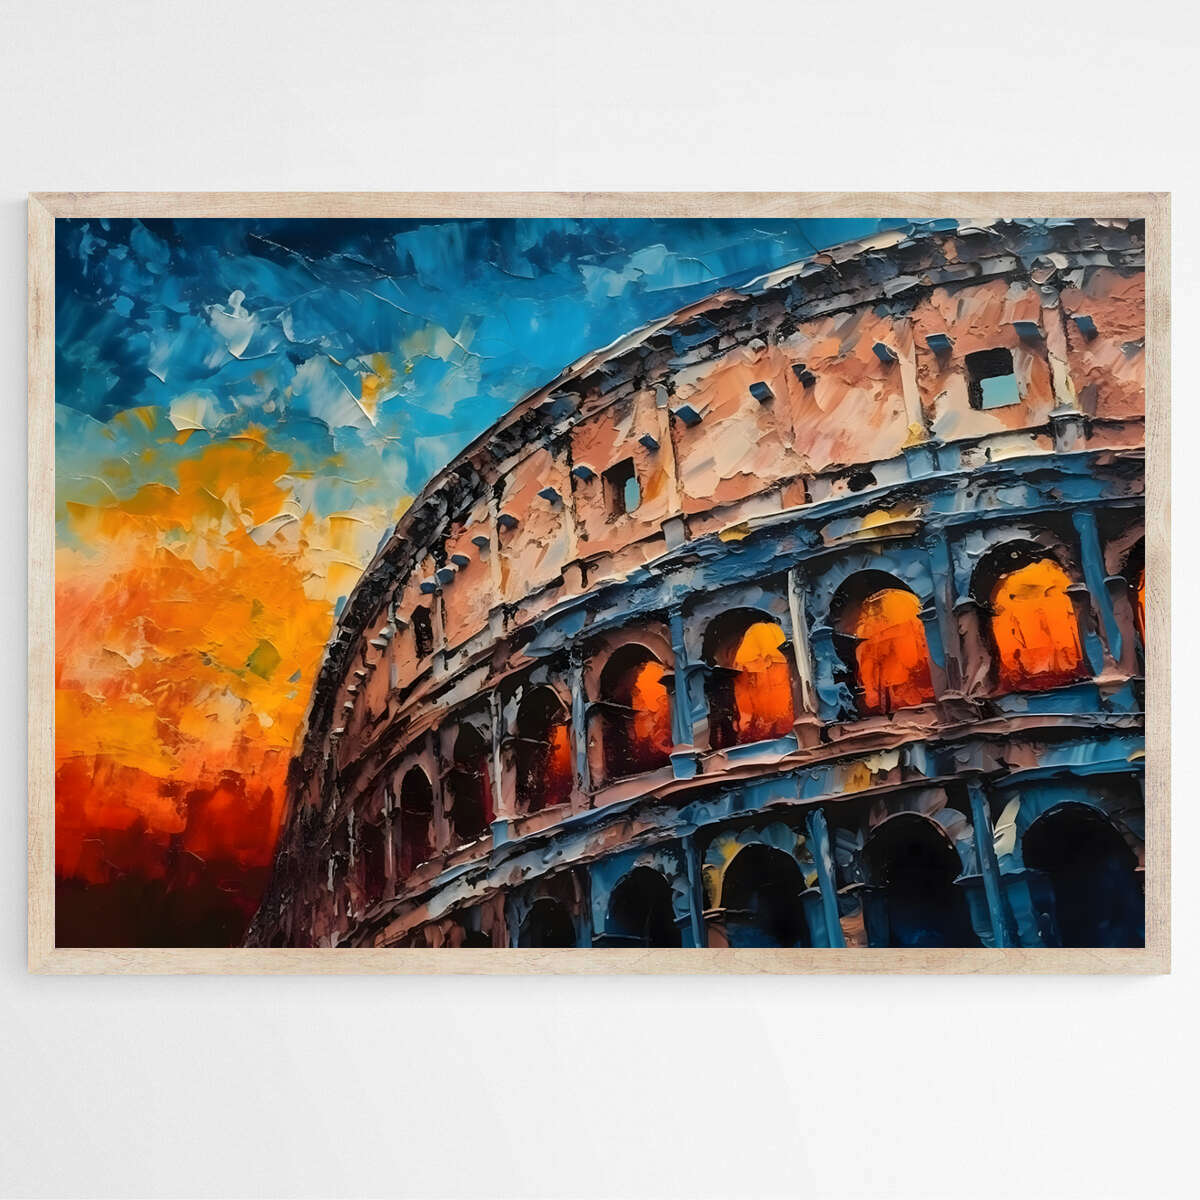 The Colosseum | Destinations Wall Art Prints - The Canvas Hive